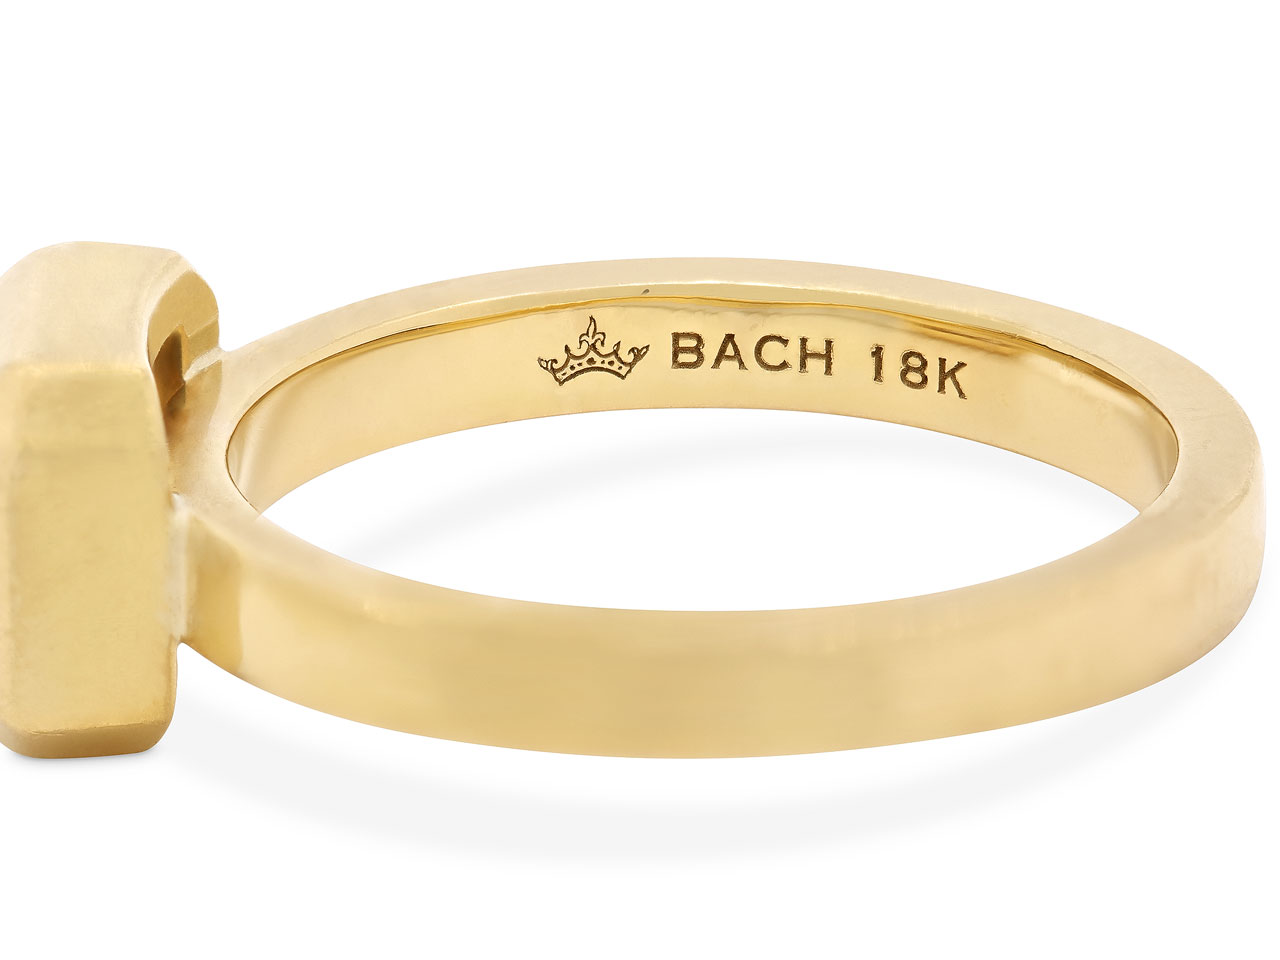 Cynthia Bach Emerald-cut Diamond Ring in 18K Gold